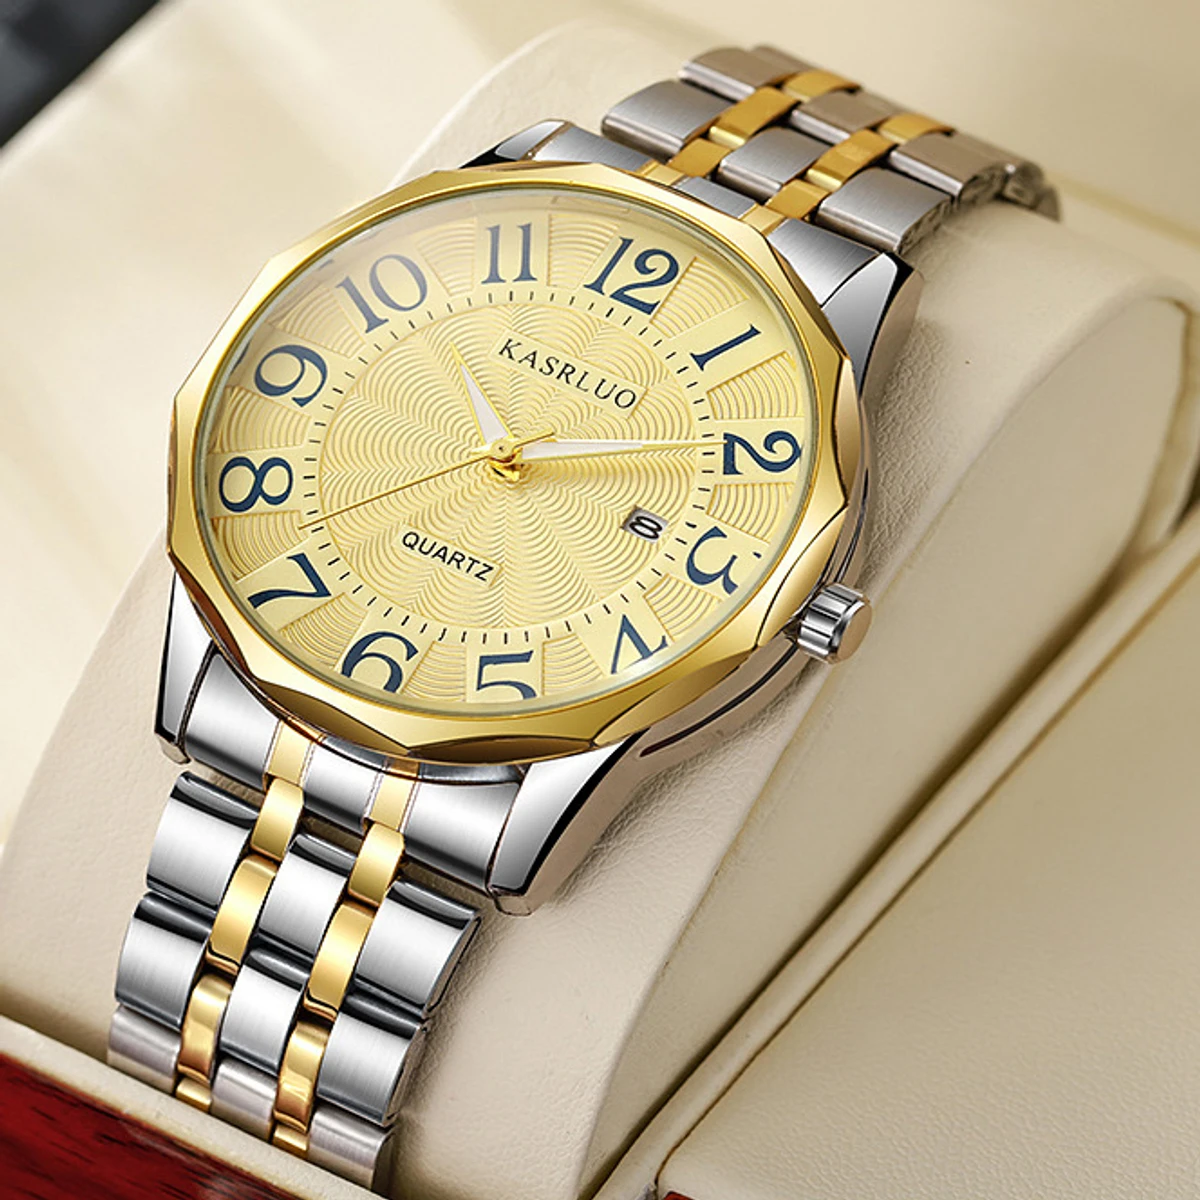 KASRLUO Popular New Fashion Quartz Watch for Men Stainless Steel Waterproof Luminous Date Mens Watches Top Brand Luxury Clock- Golden & Silver